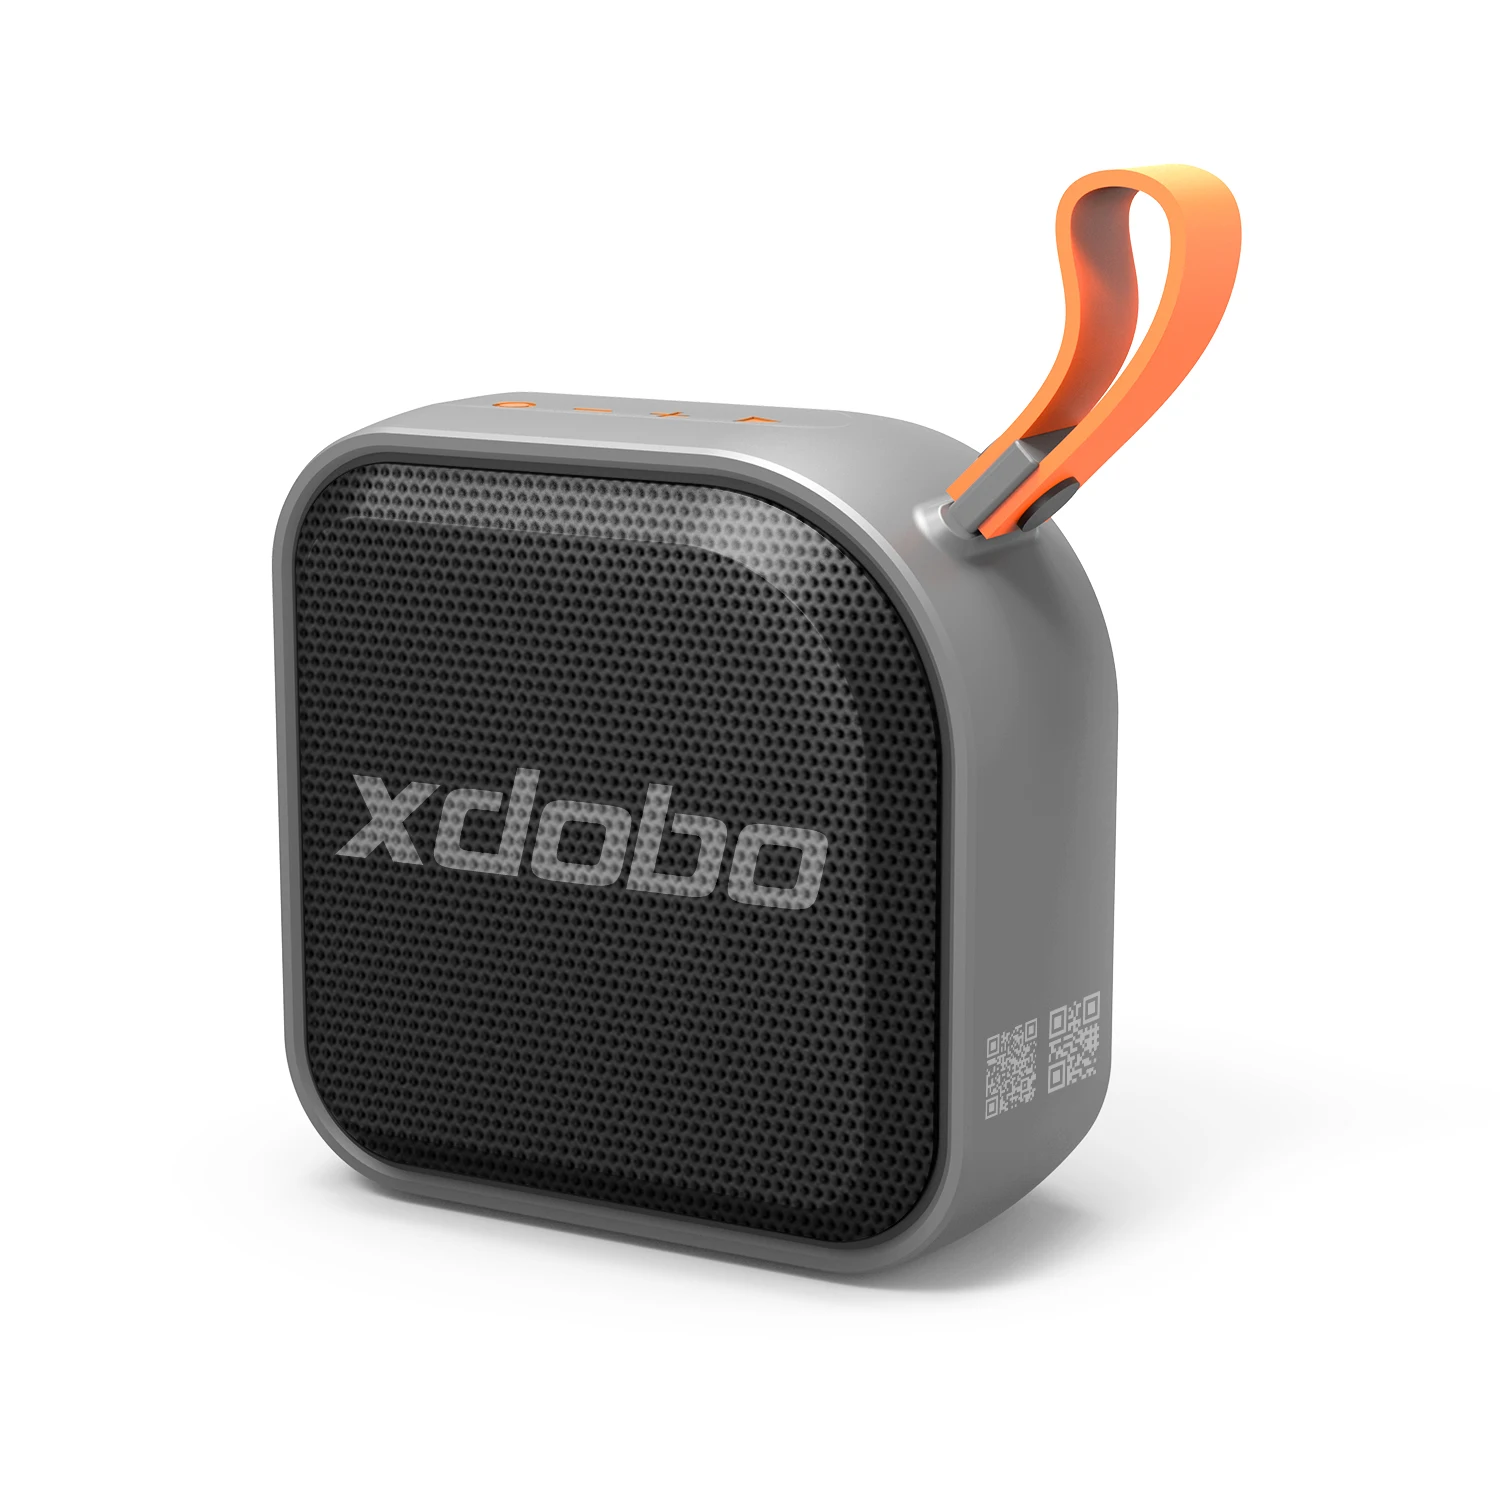 

Xdobo 15W Mini Portable Wireless Speakers BT 5.0 Audio Outdoors IPX7 Waterproof Super Bass speaker